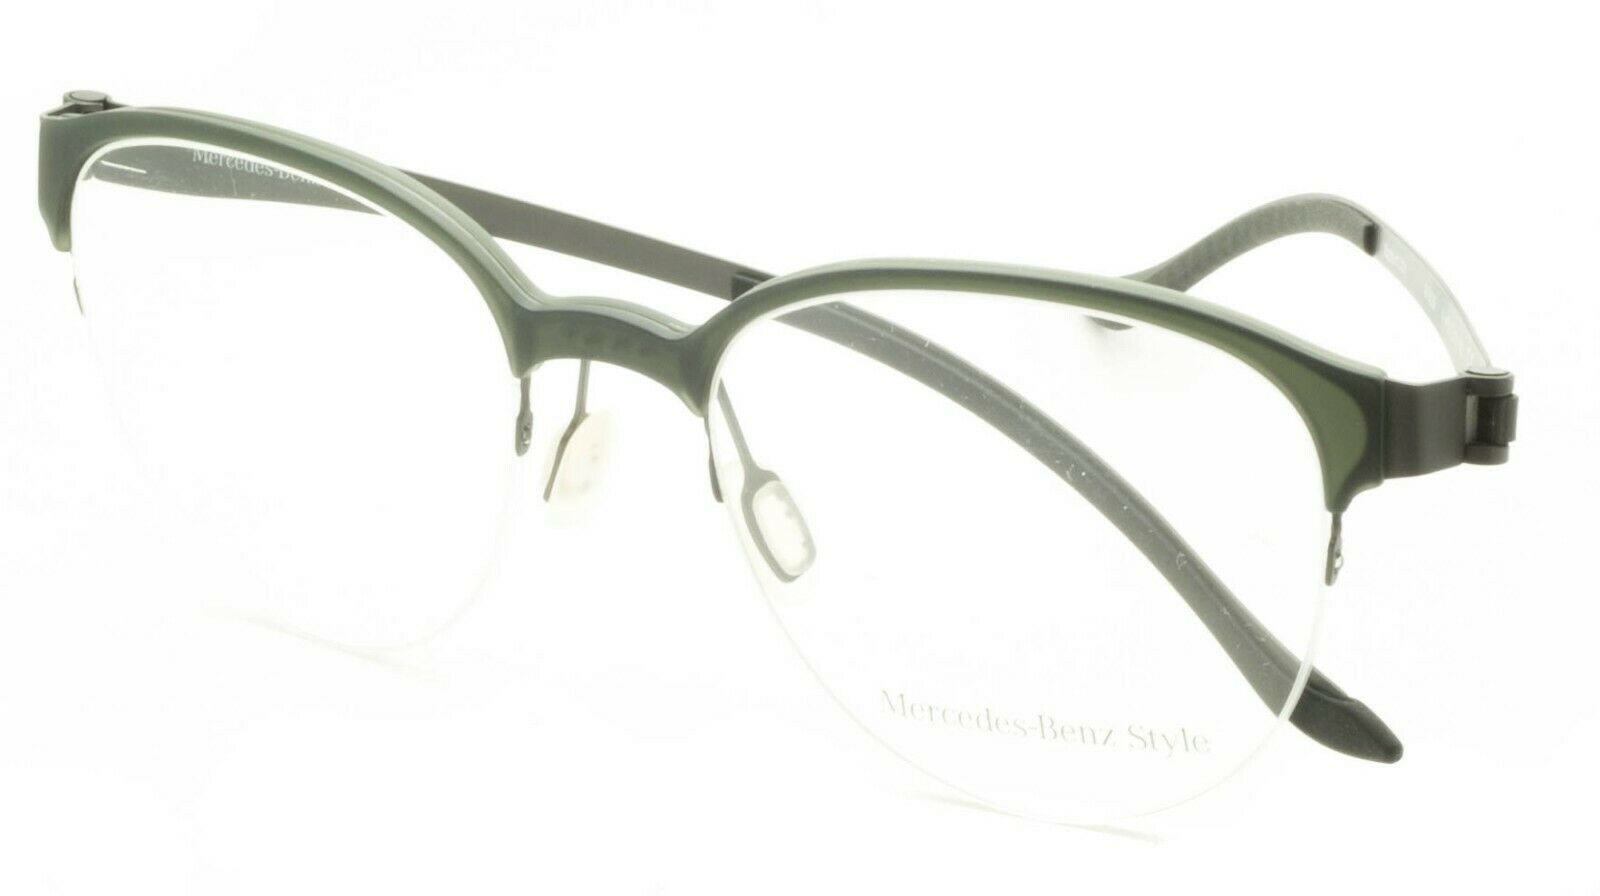 MERCEDES BENZ STYLE M 6039 A 53mm Eyewear FRAMES NEW RX Optical Eyeglasses BNIB